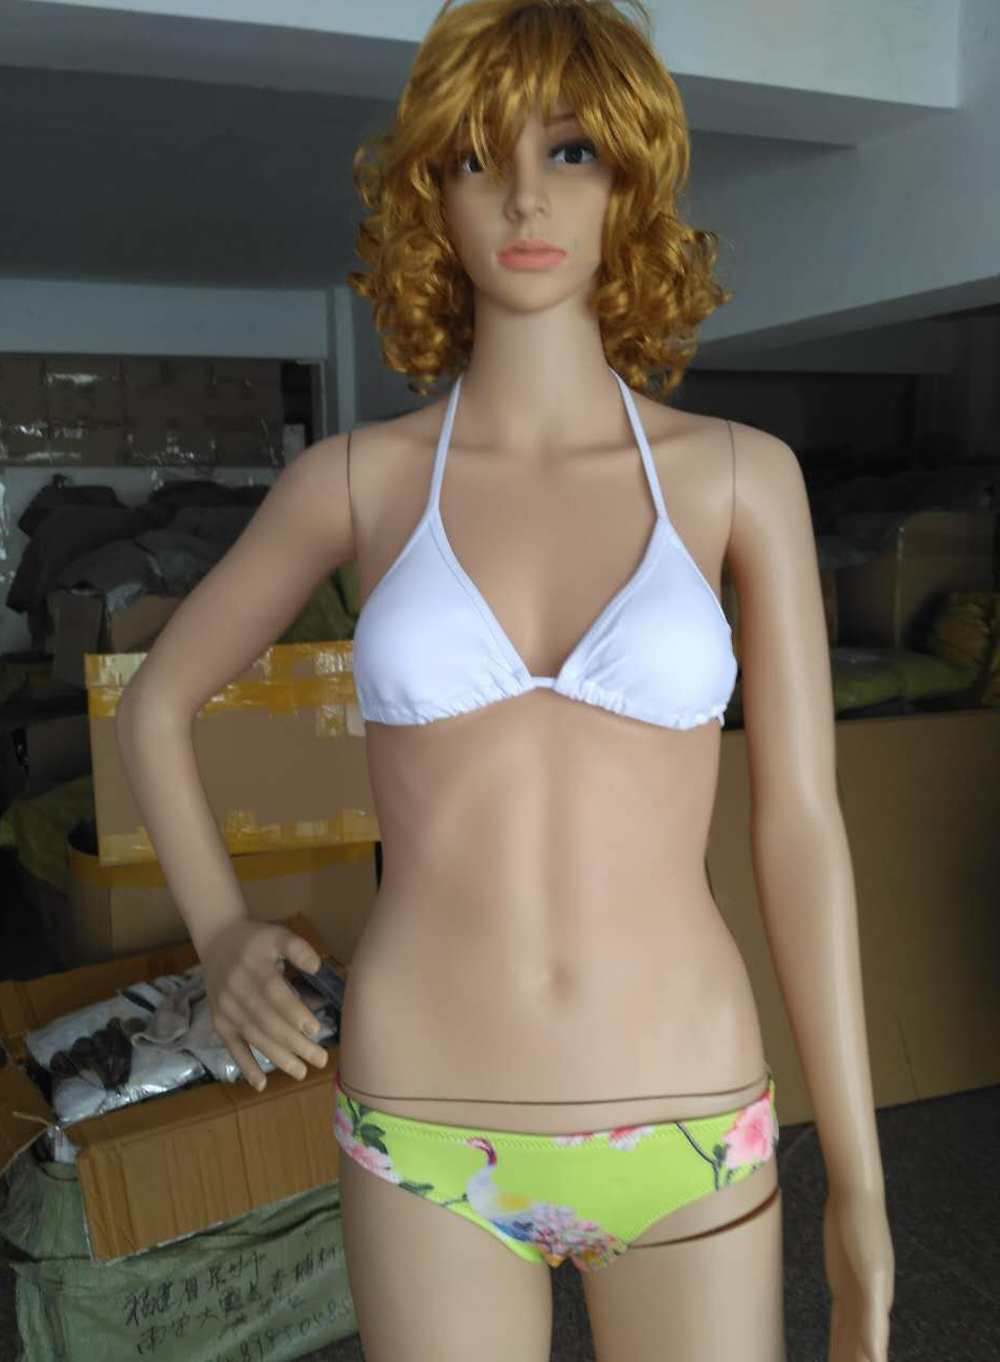 F4641-2 white sexy bikini set with green floral